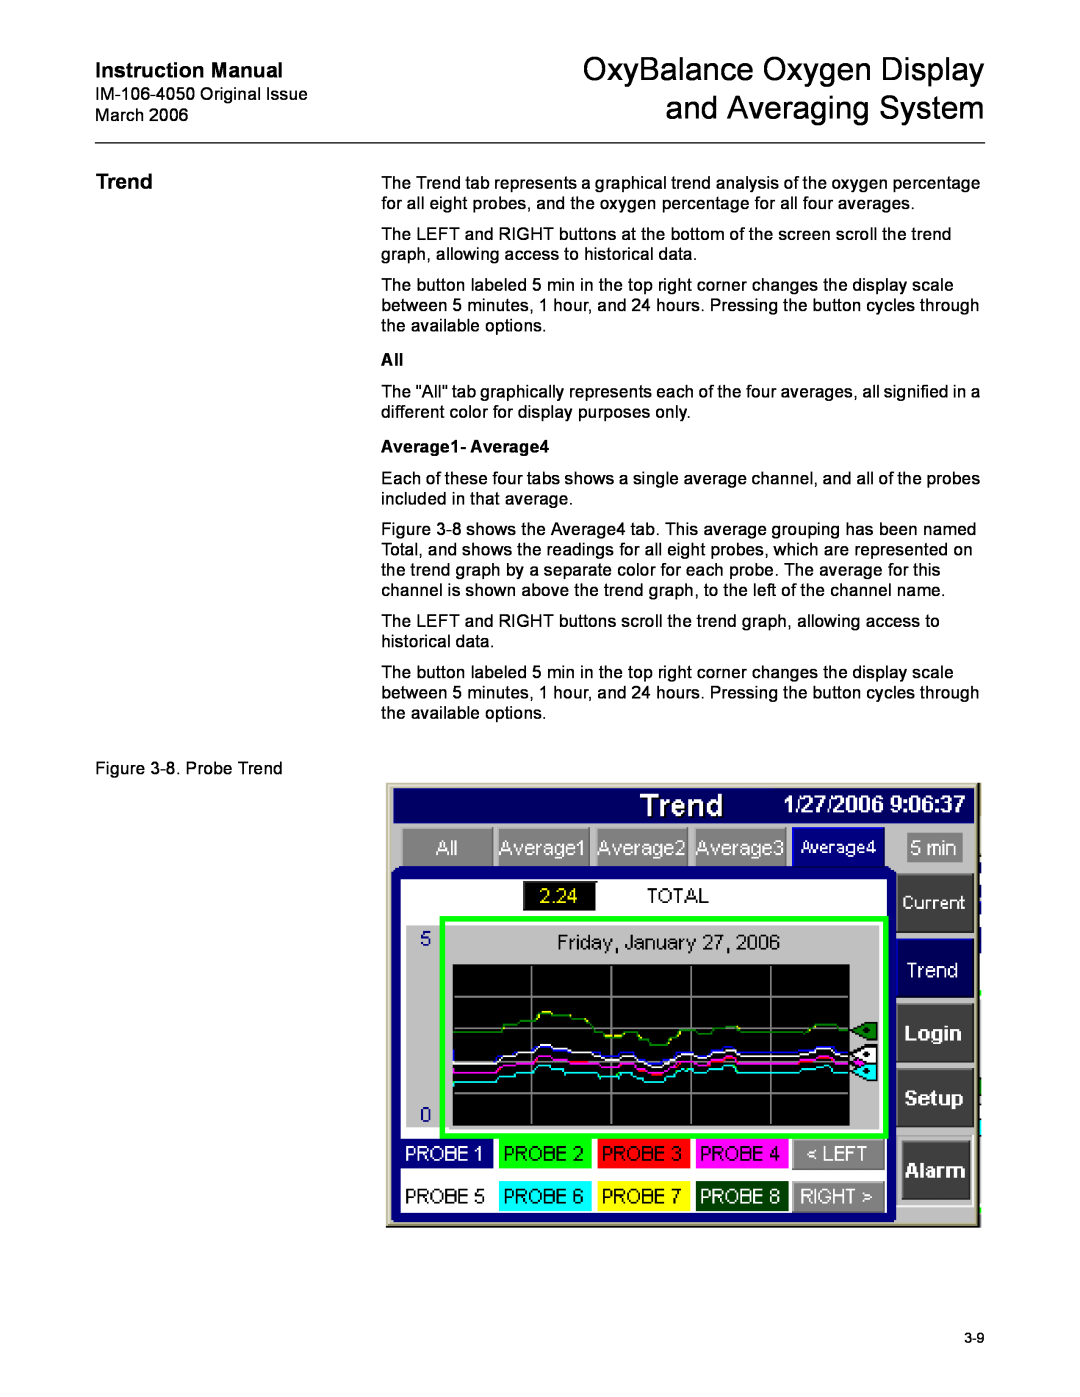 Emerson IM-106-4050 Trend, Average1- Average4, OxyBalance Oxygen Display and Averaging System, Instruction Manual 